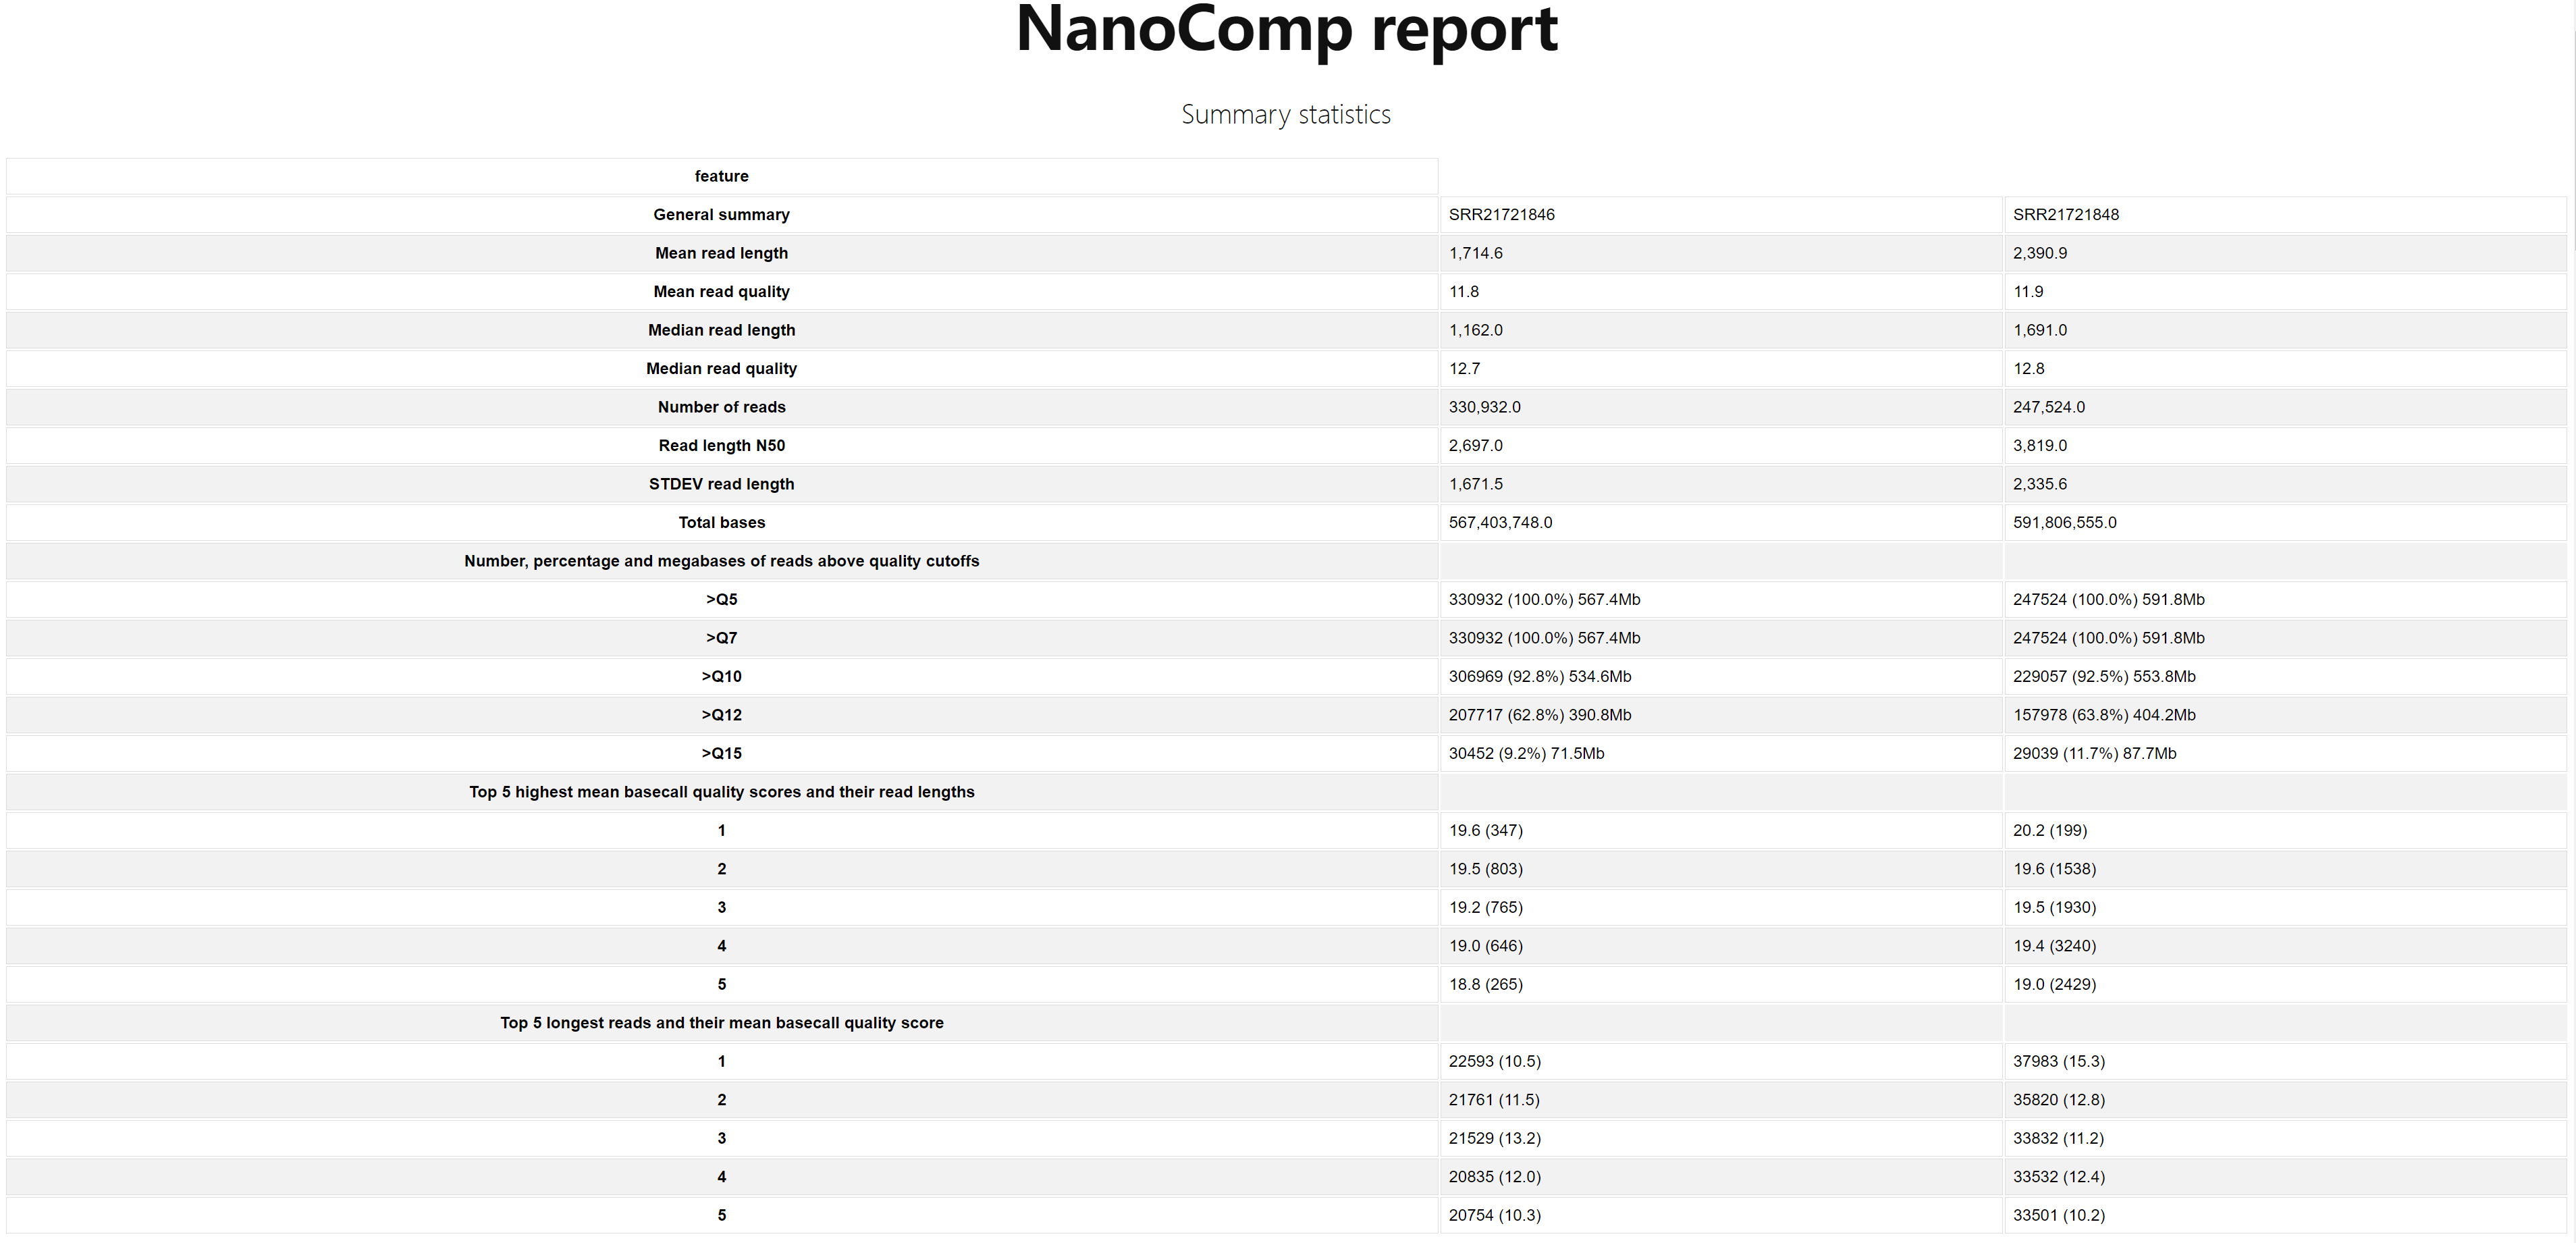 NanoComp Report Summary Statistic